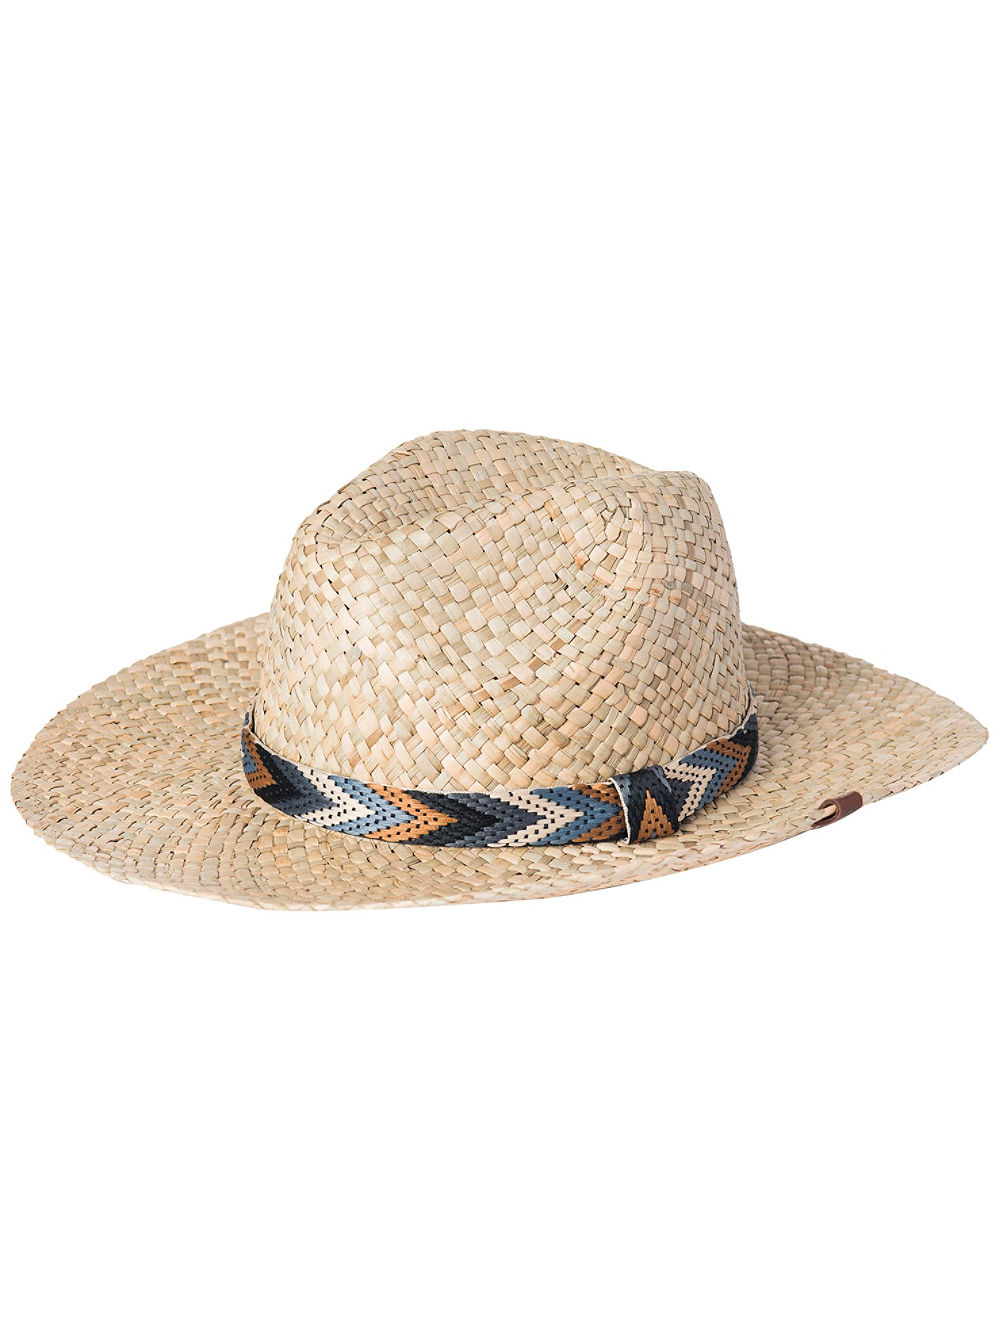 Black Sands Panama Hat